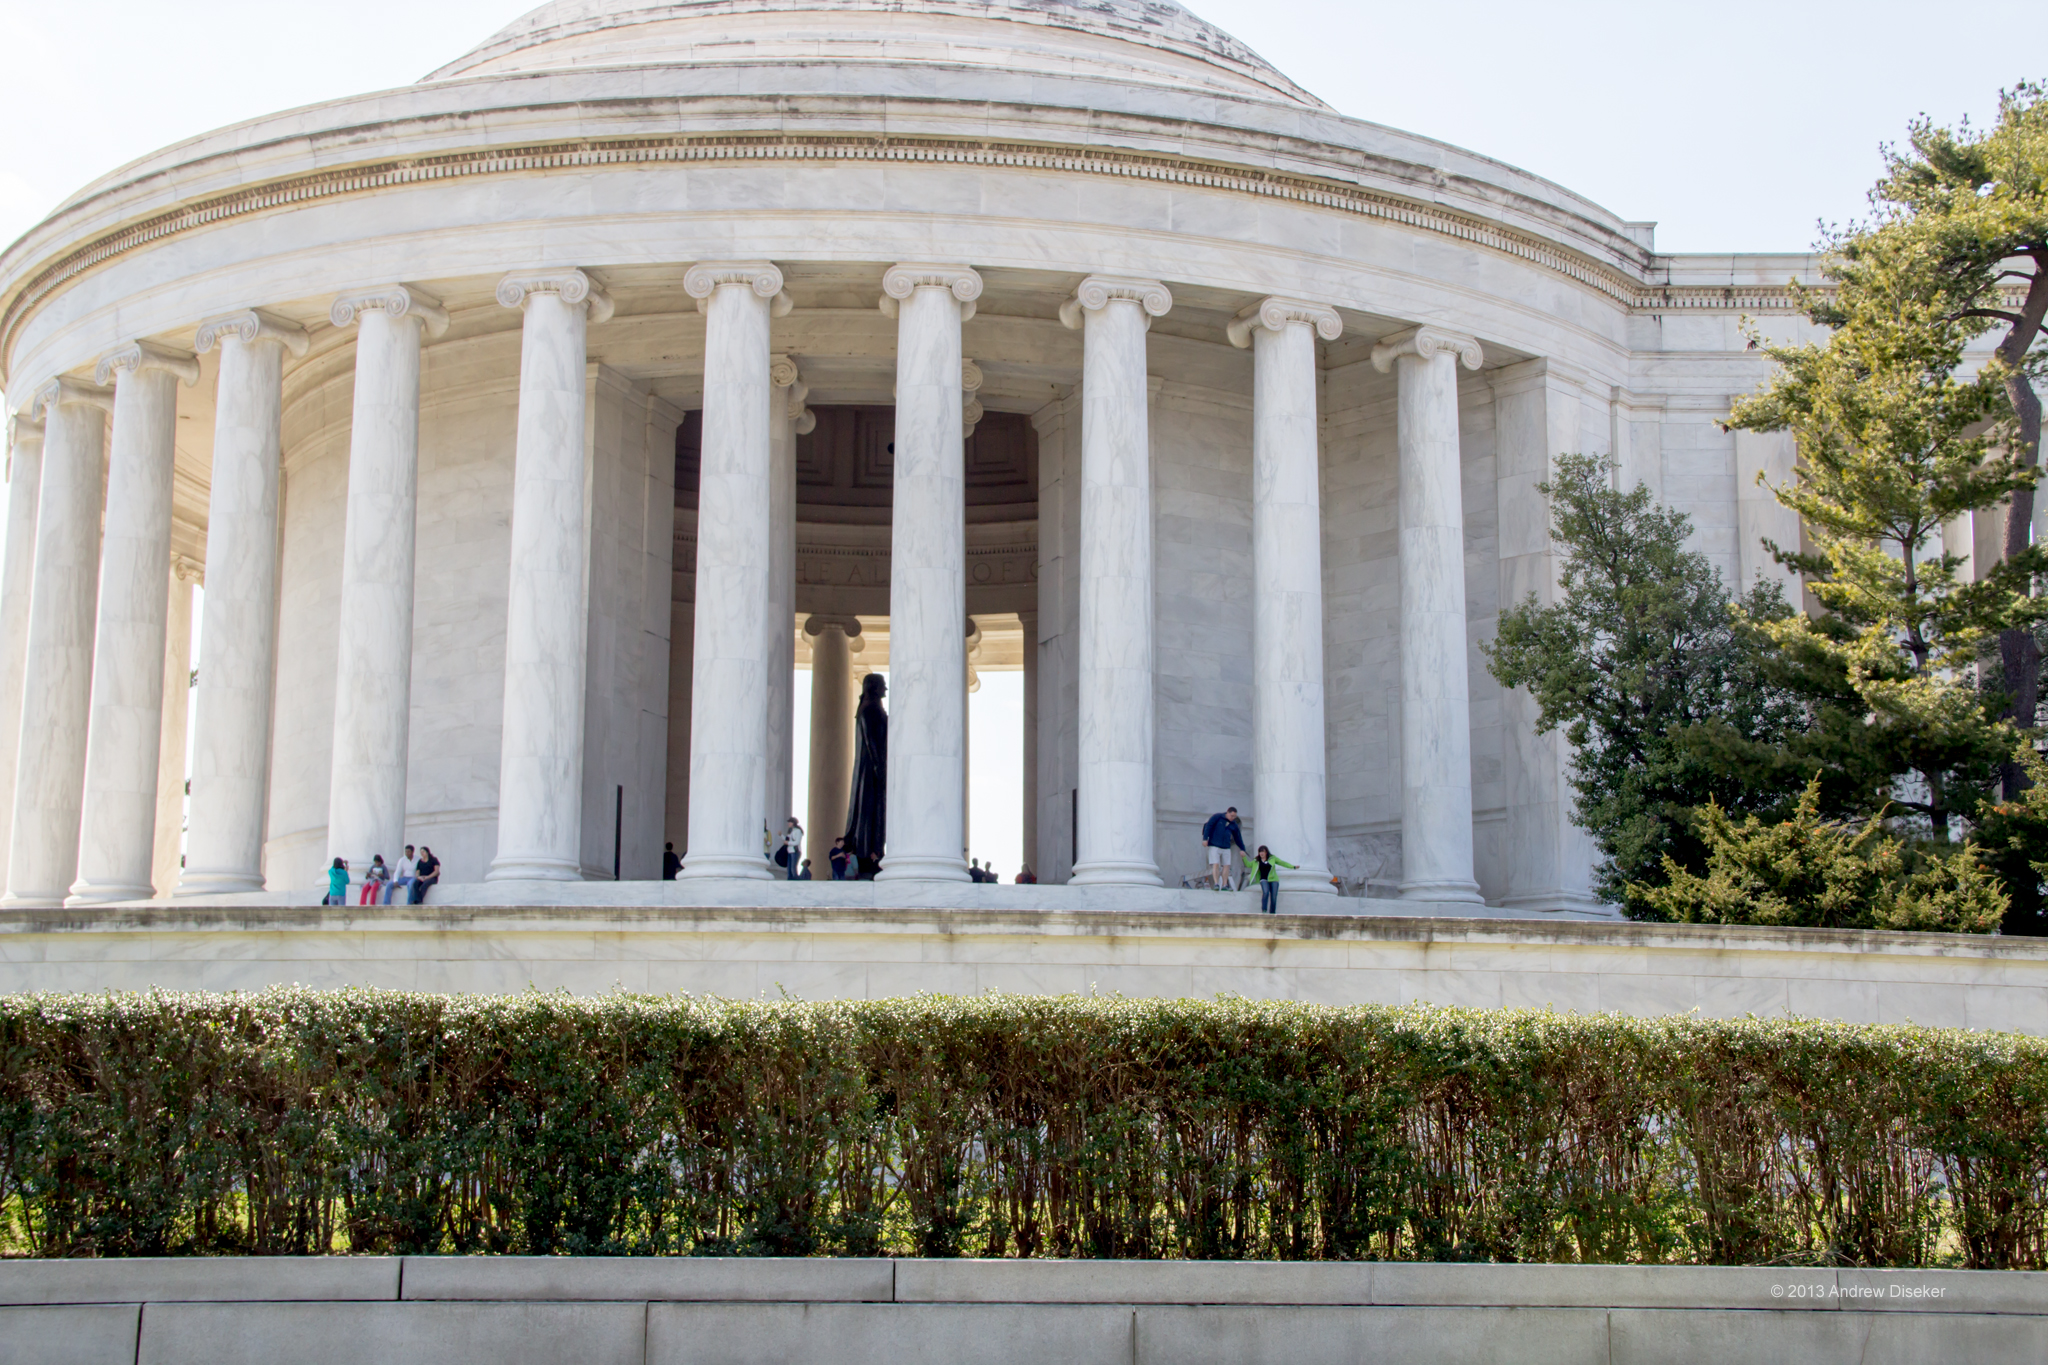 View inside Jefferson Memorial with statue of Thomas Jefferson